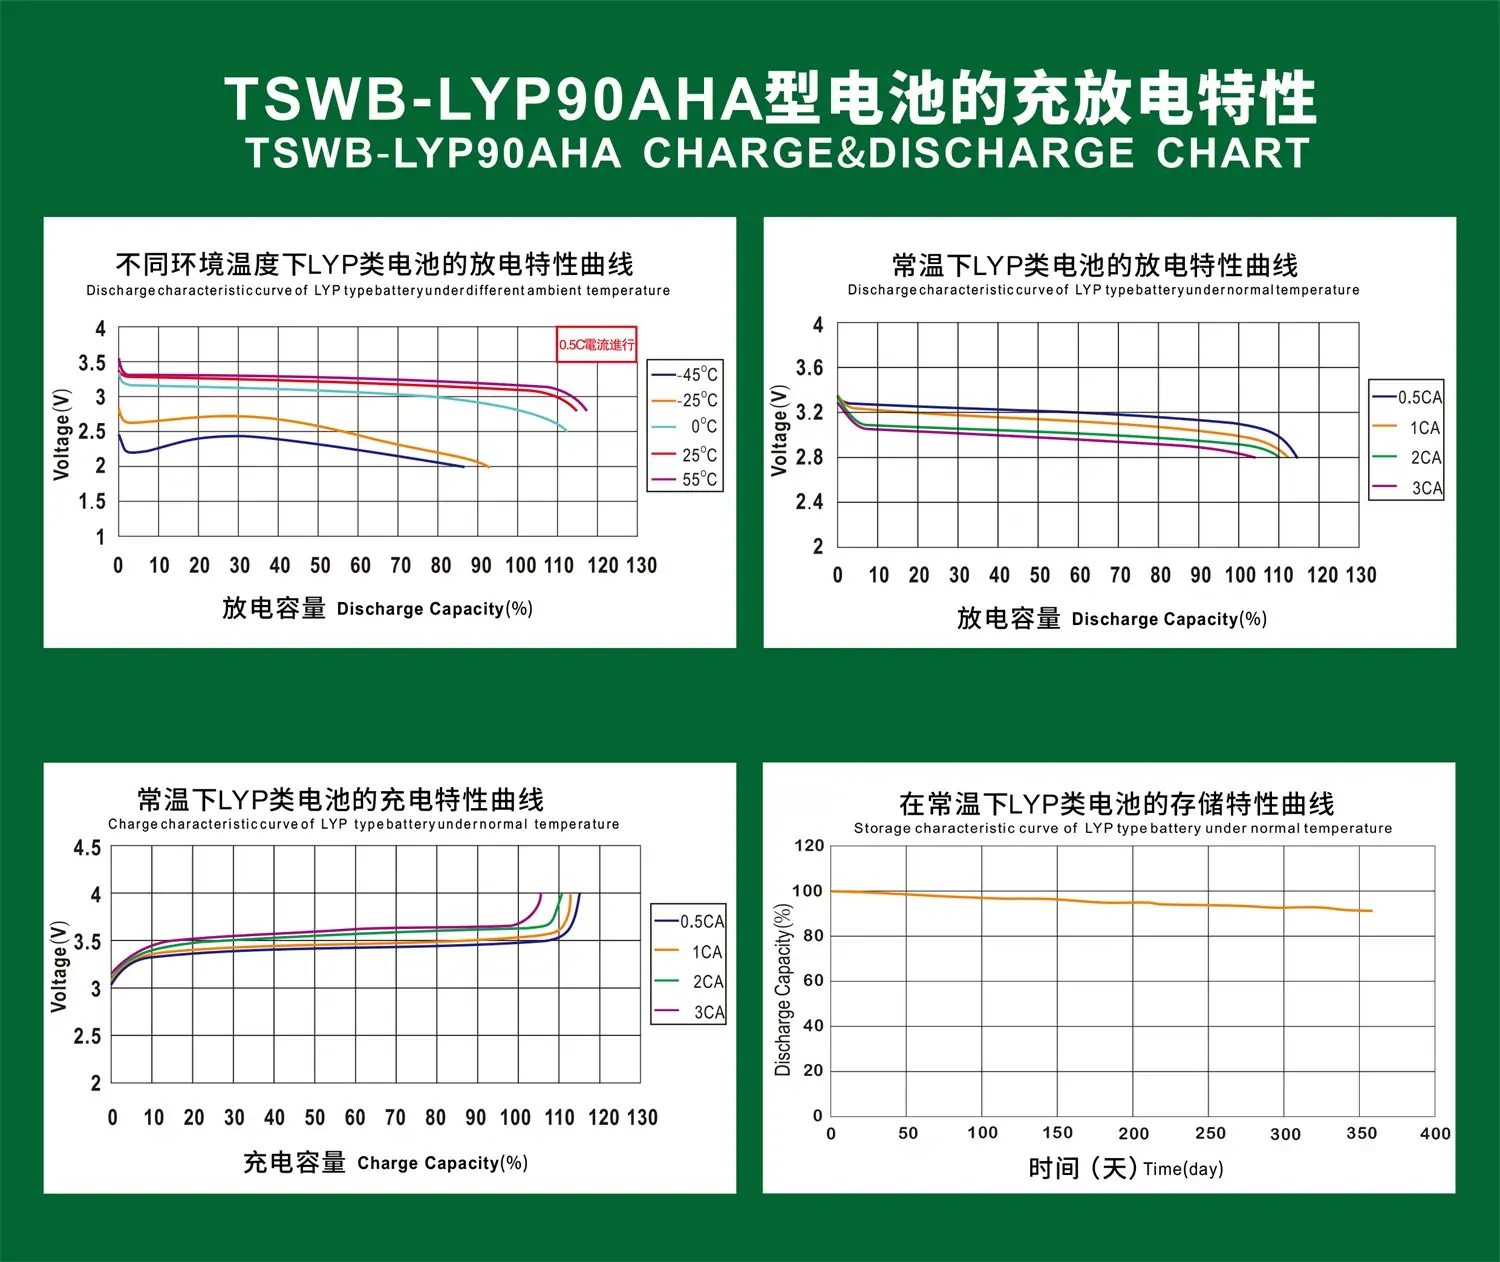 TSWB-LYP90AHA CHARGE&DISCHARGE CHART